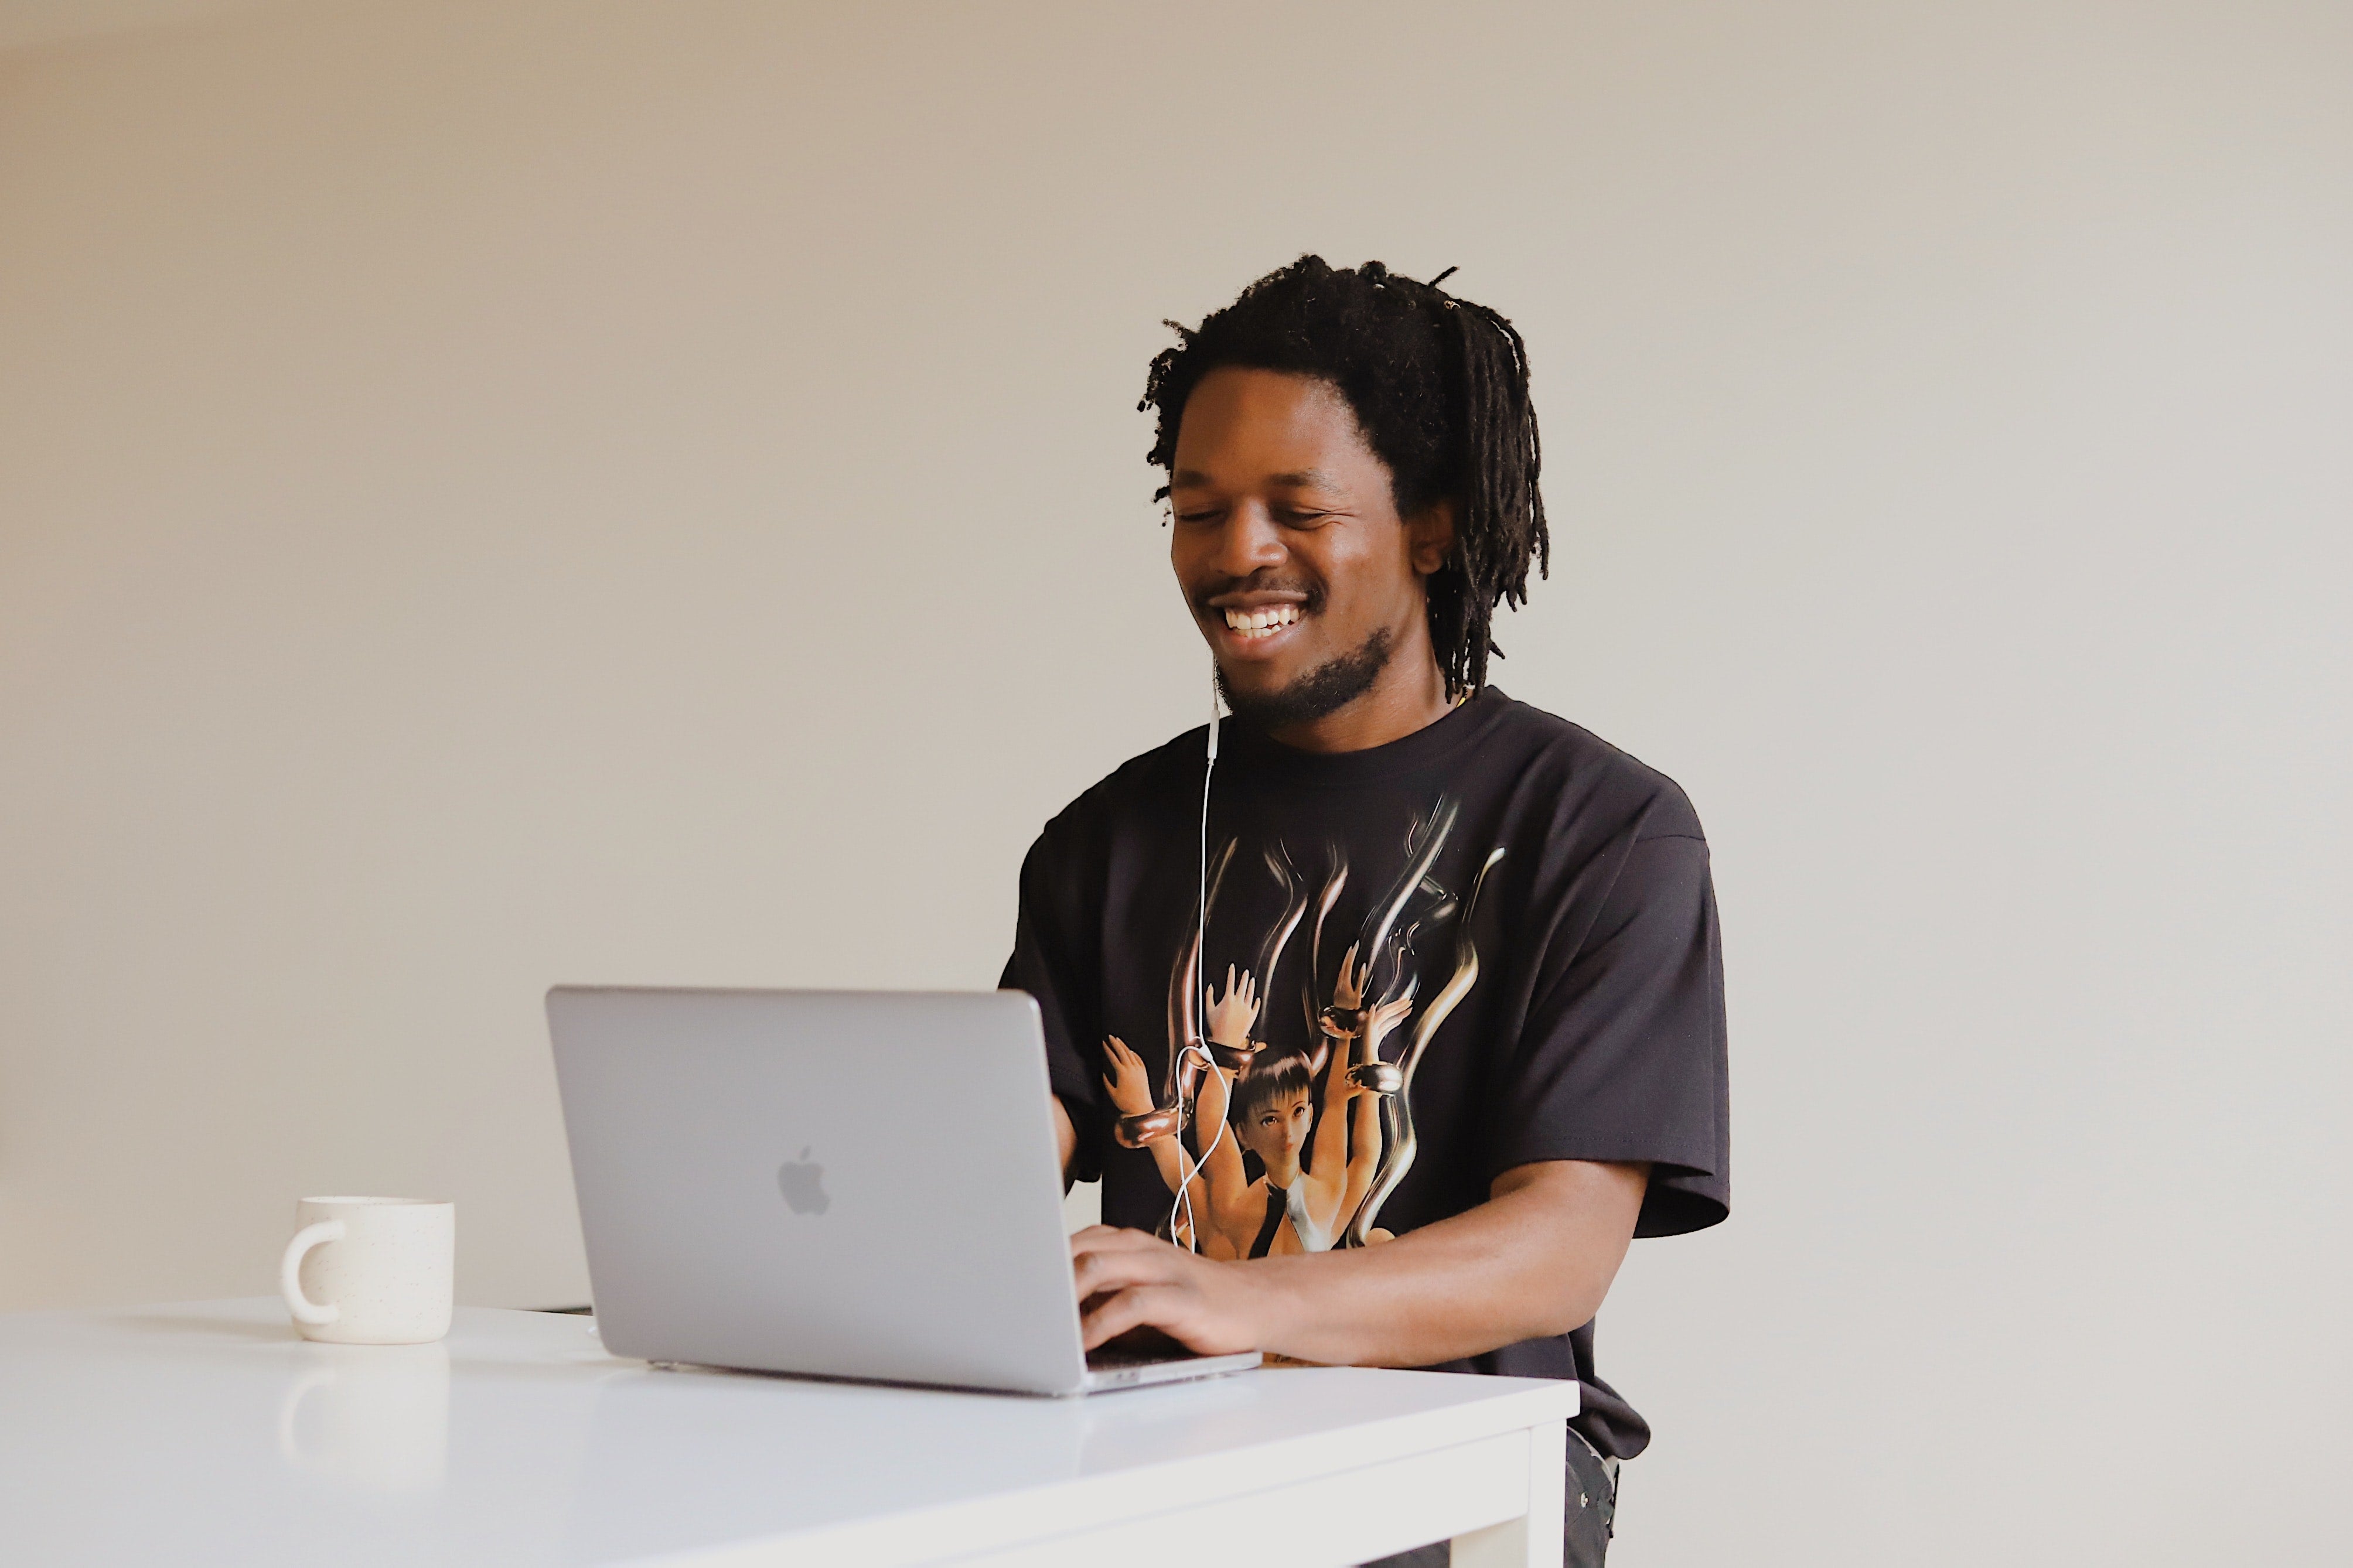 A man sitting at a laptop smiles